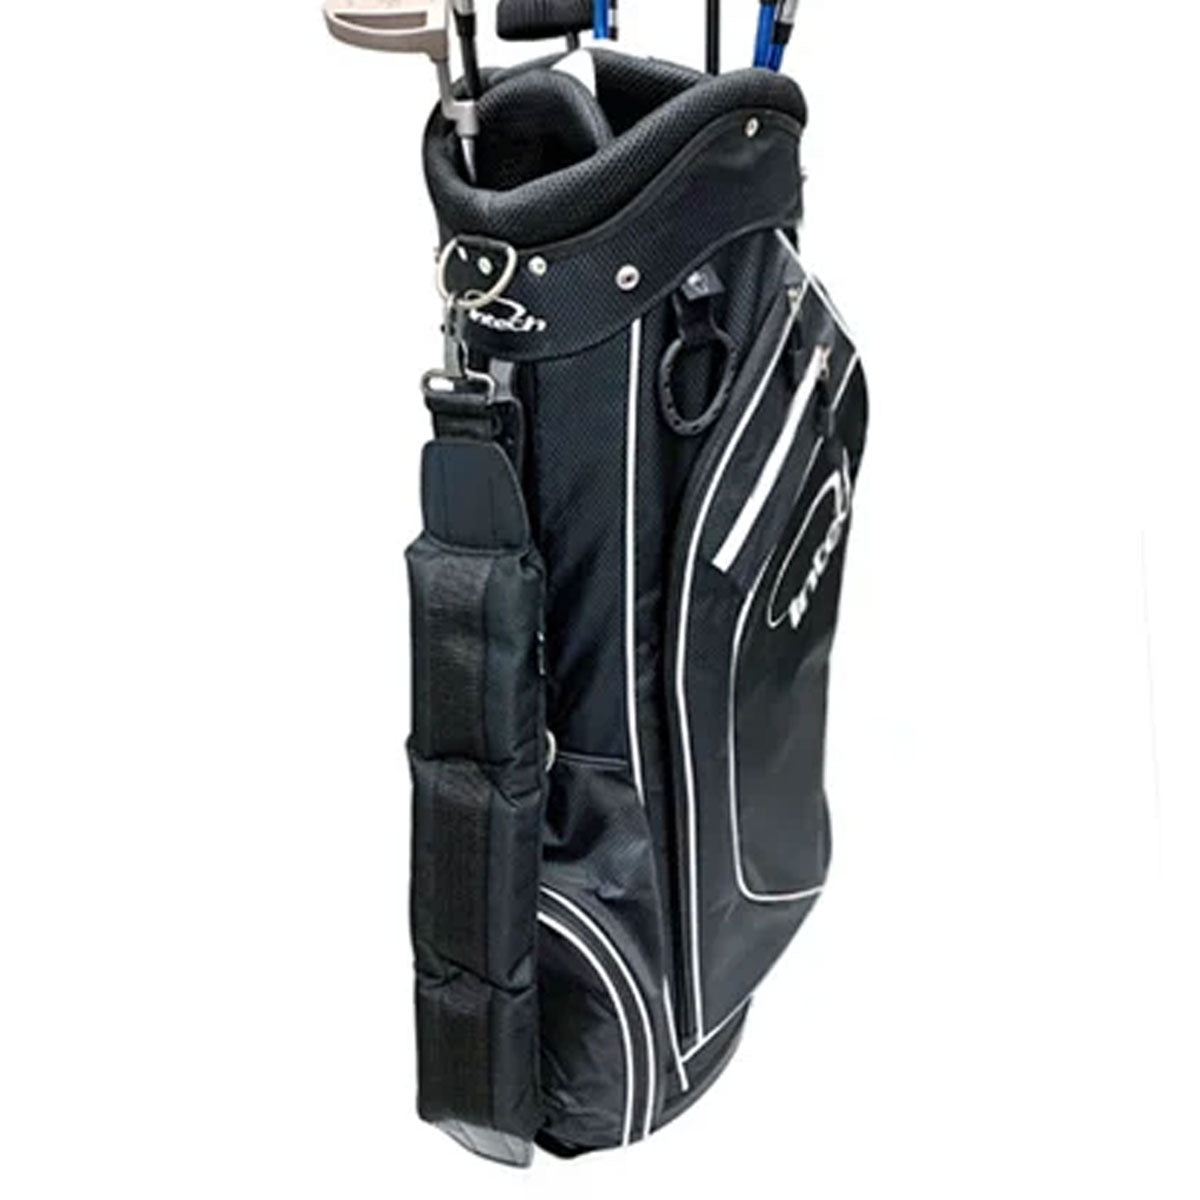 an Intech Single Padded Adjustable Golf Bag Strap on a black golf bag with golf clubs inside